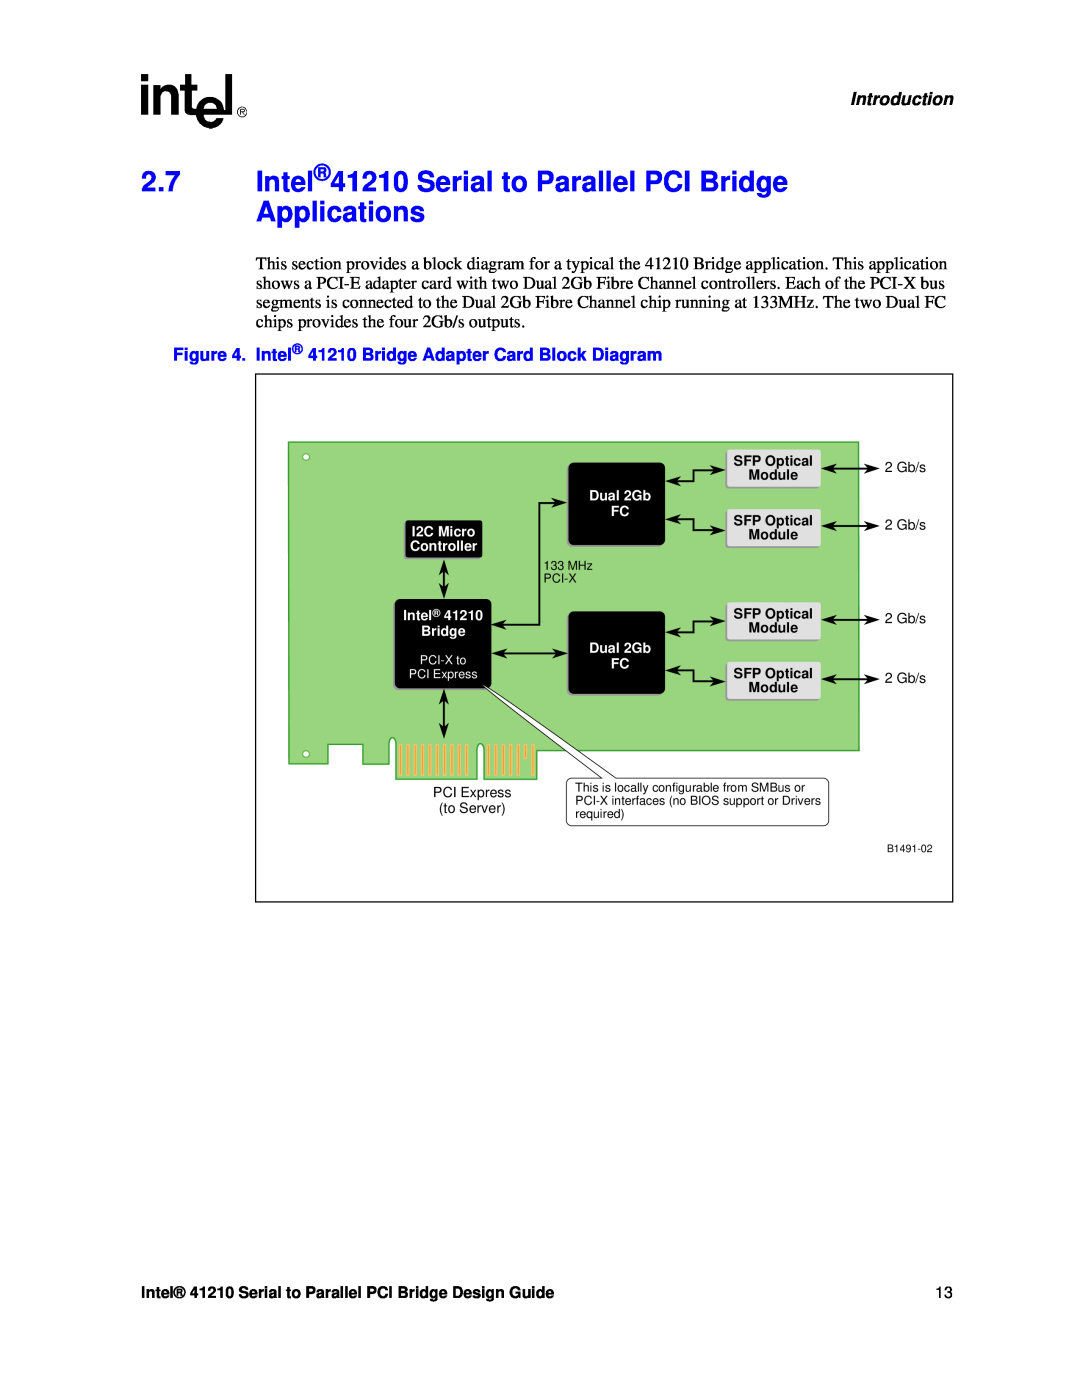 Intel manual Intel41210 Serial to Parallel PCI Bridge Applications, Intel 41210 Bridge Adapter Card Block Diagram 